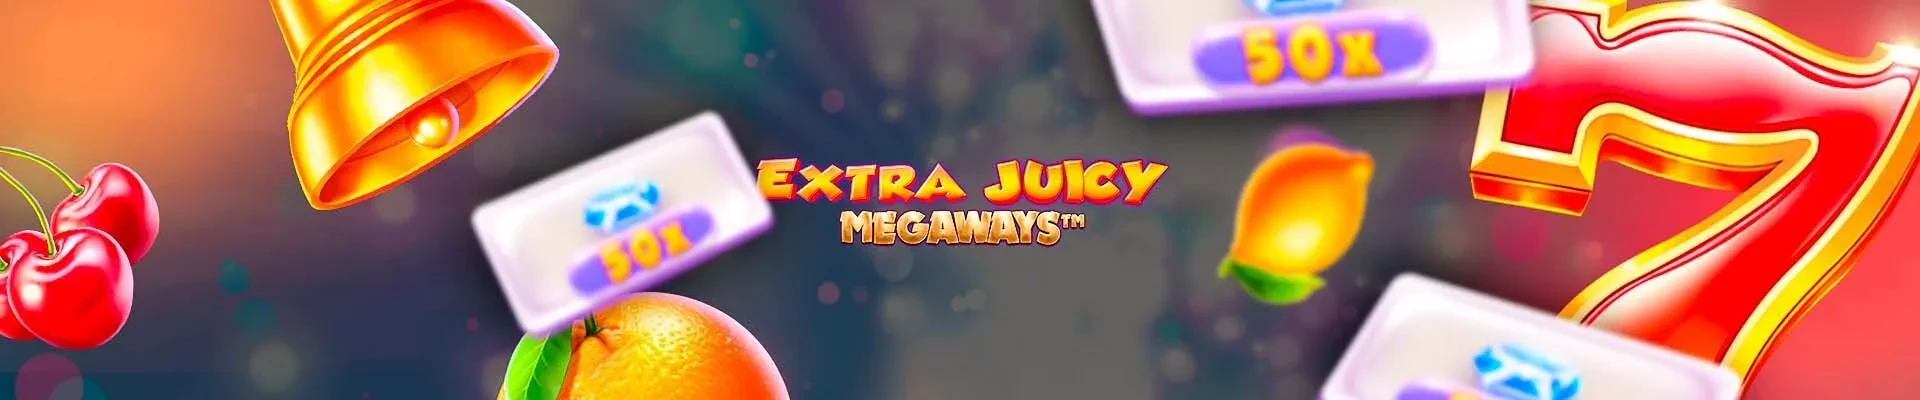 header focus extra juicy megaways